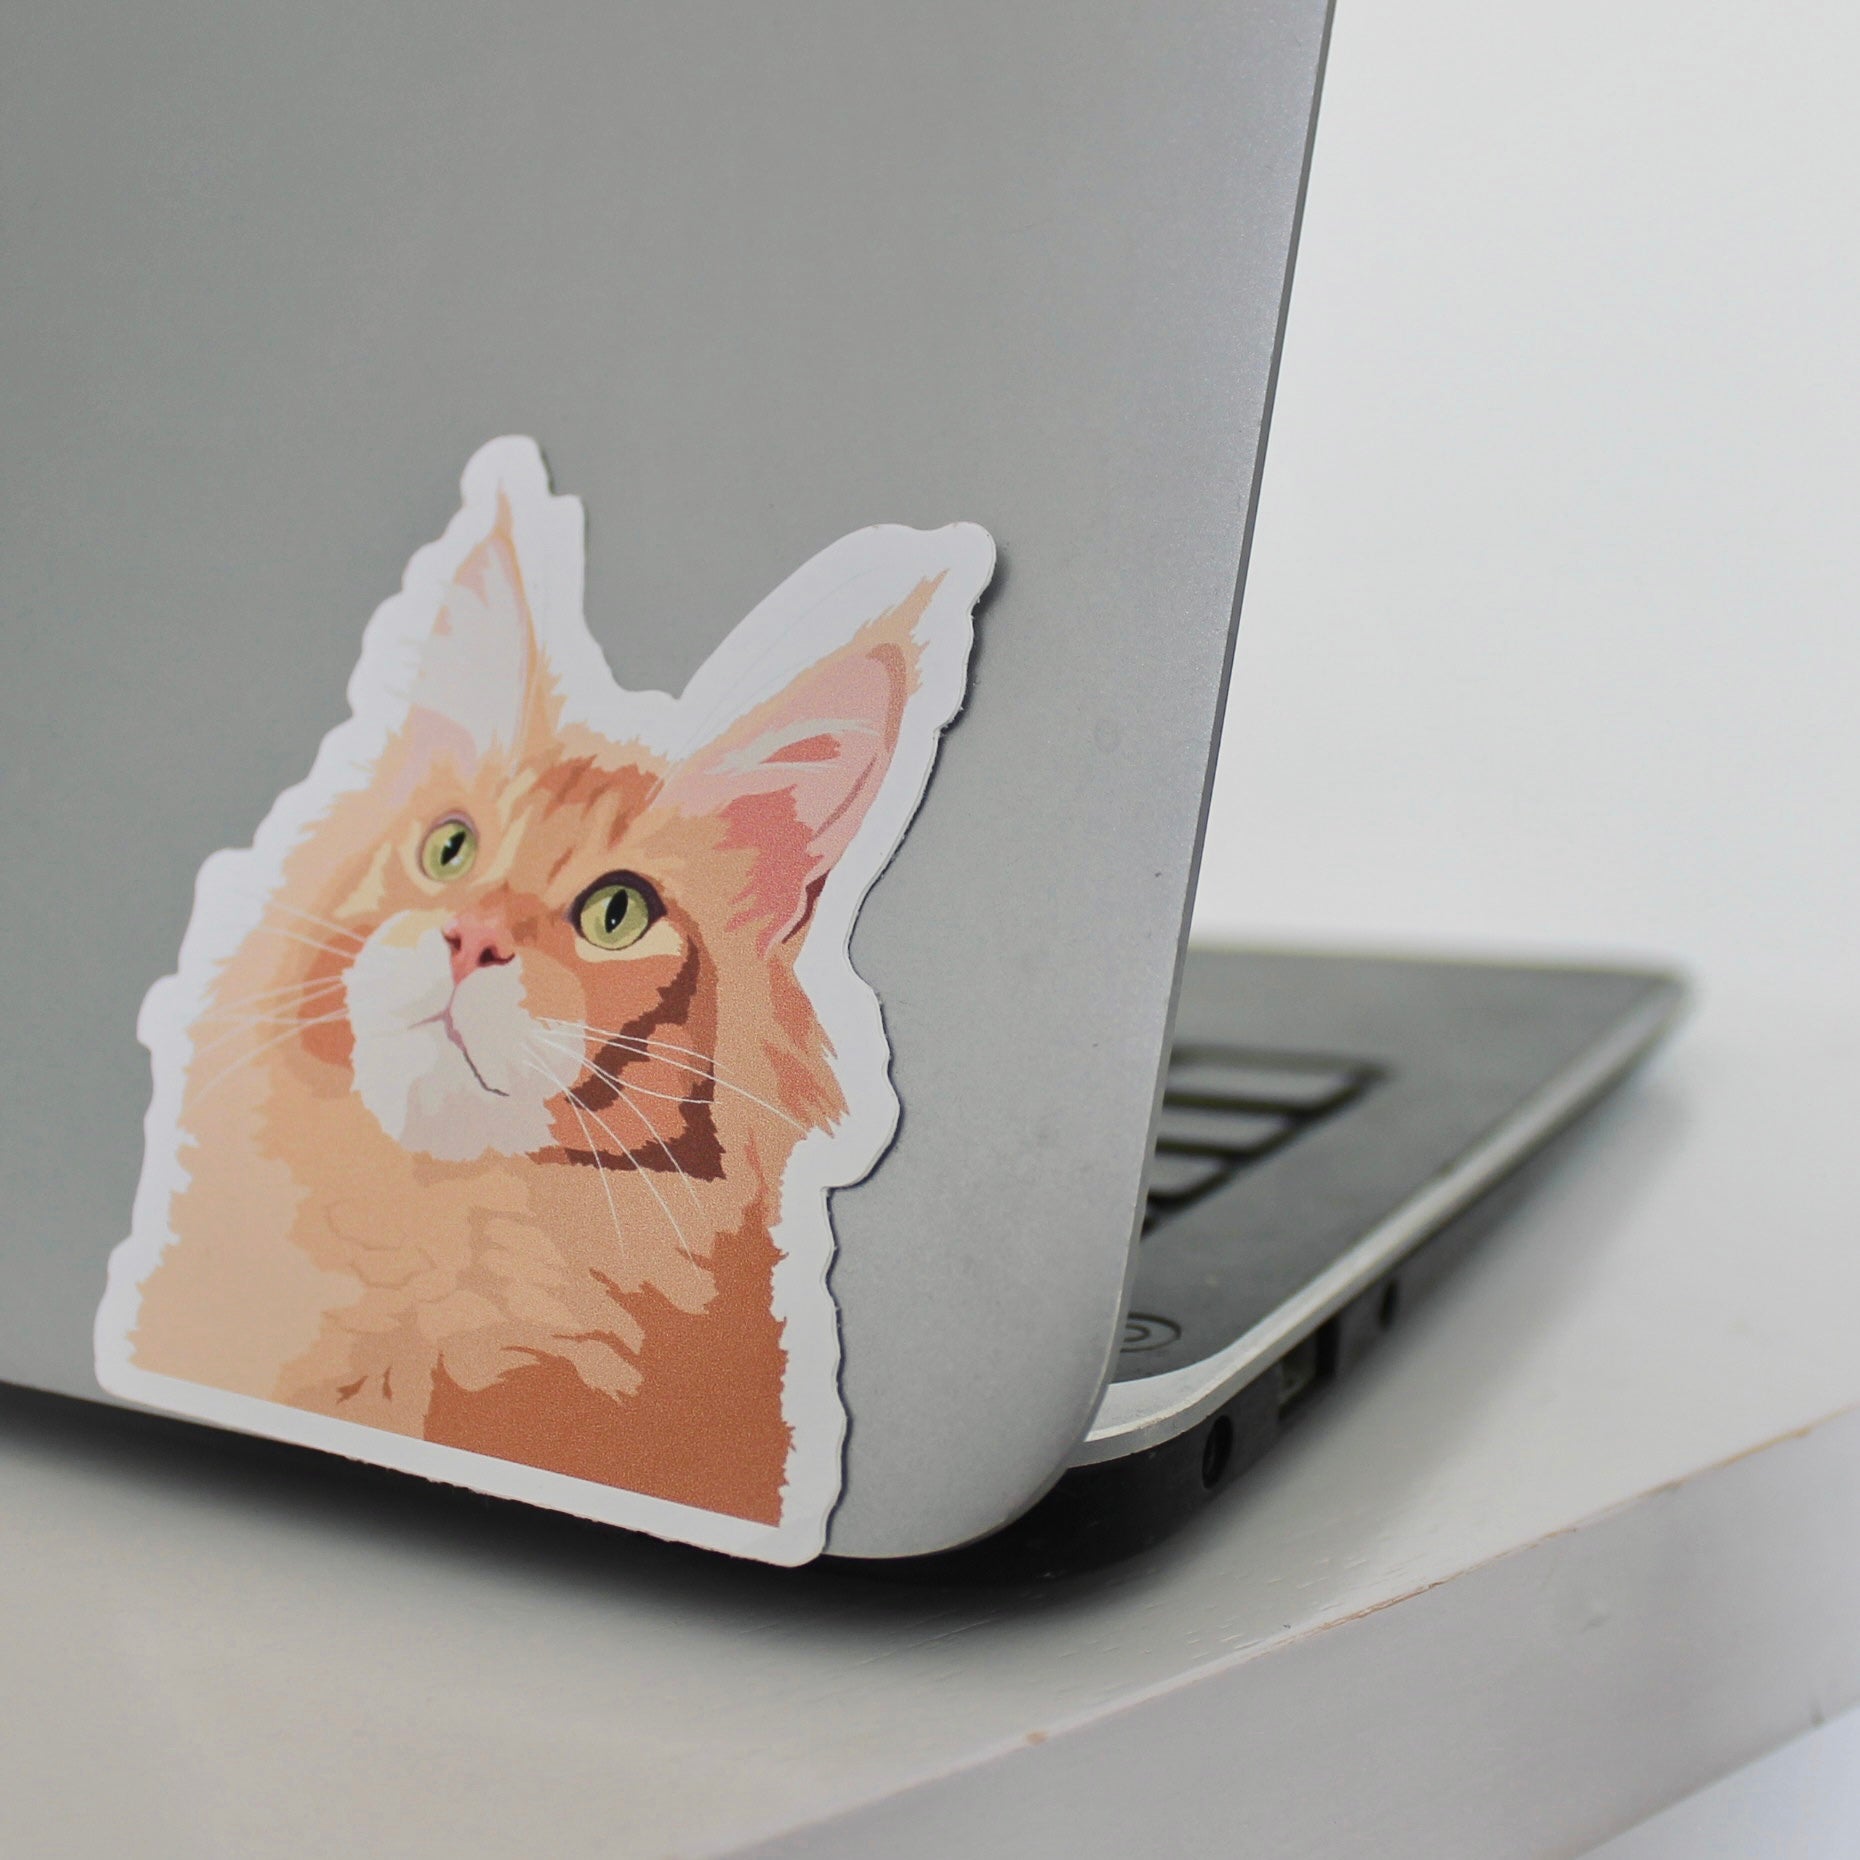 Maine coon sticker on laptop